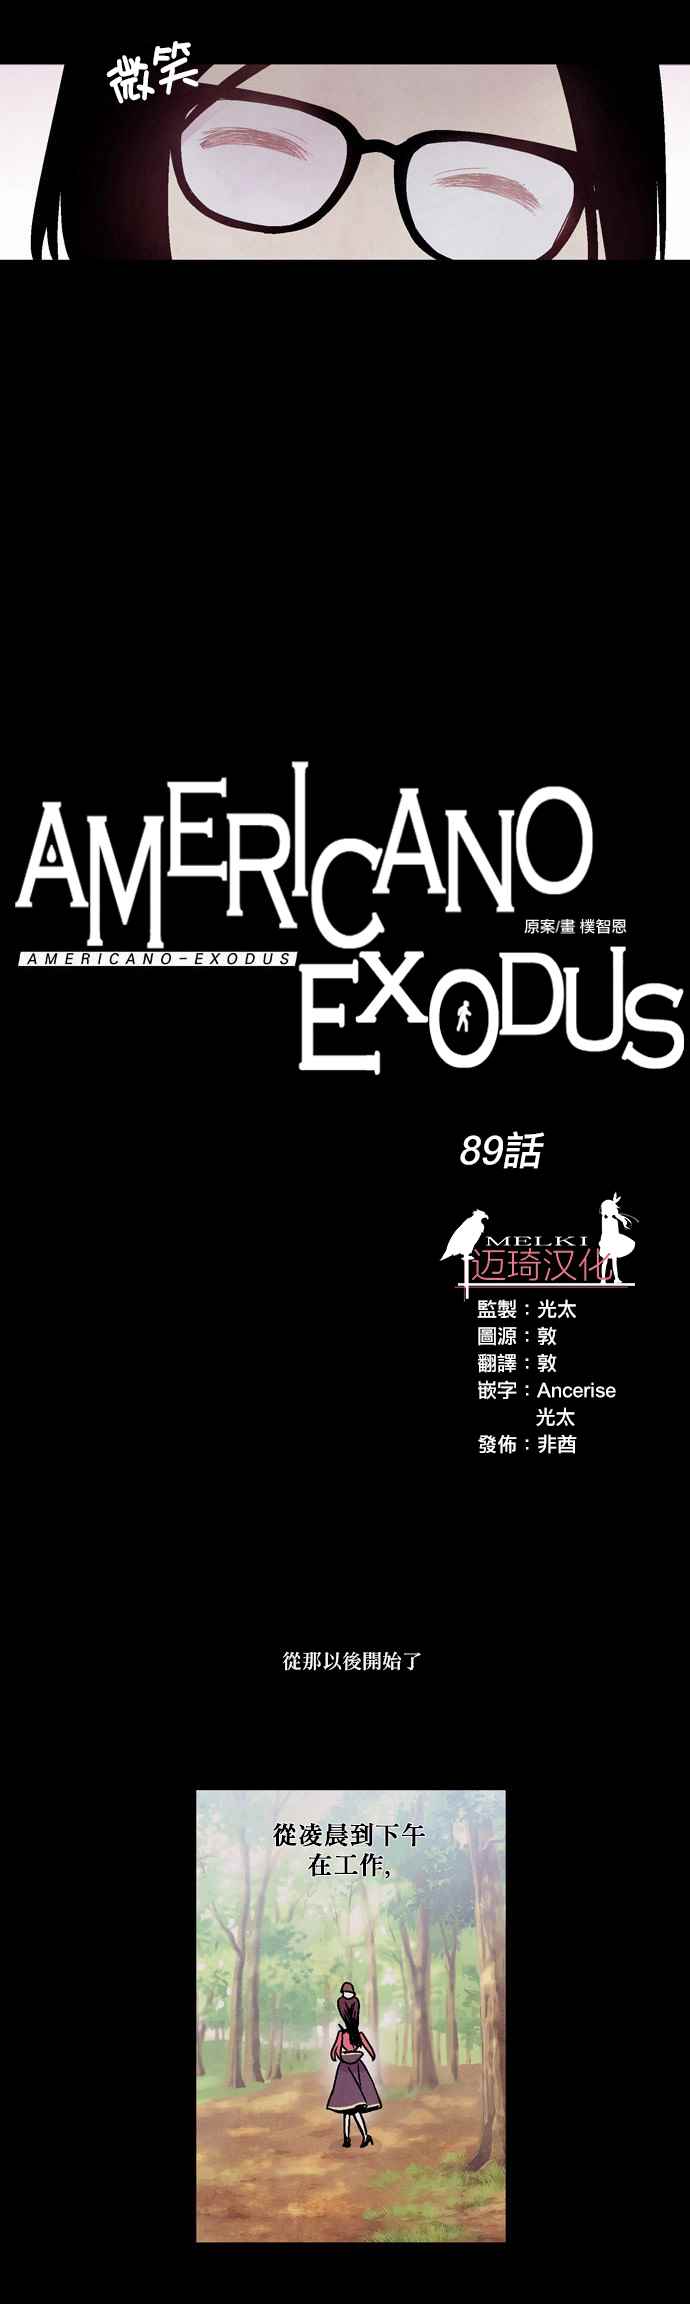 《Americano-exodus》漫画 exodus 089集